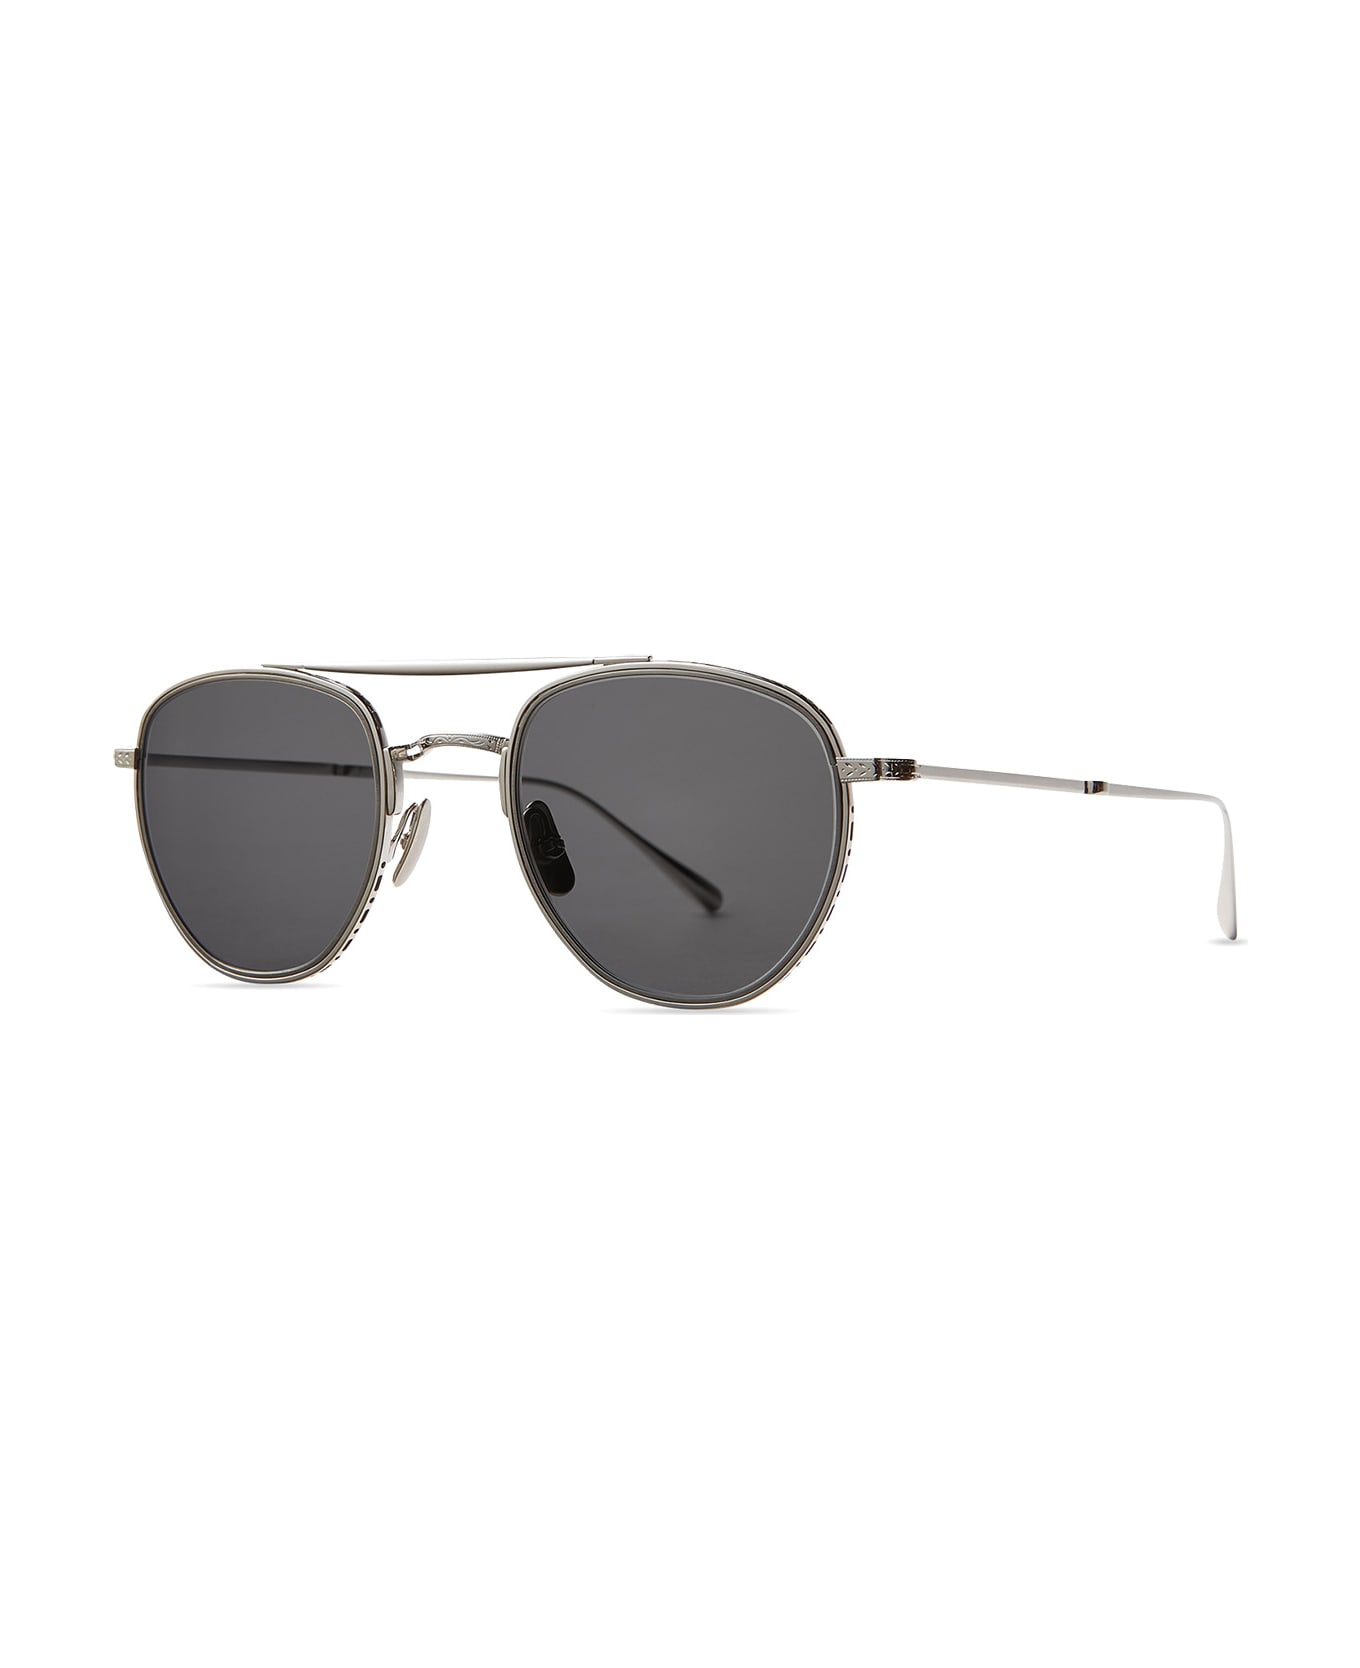 Mr. Leight Roku Ii S Platinum-pewter Sunglasses - Platinum-Pewter